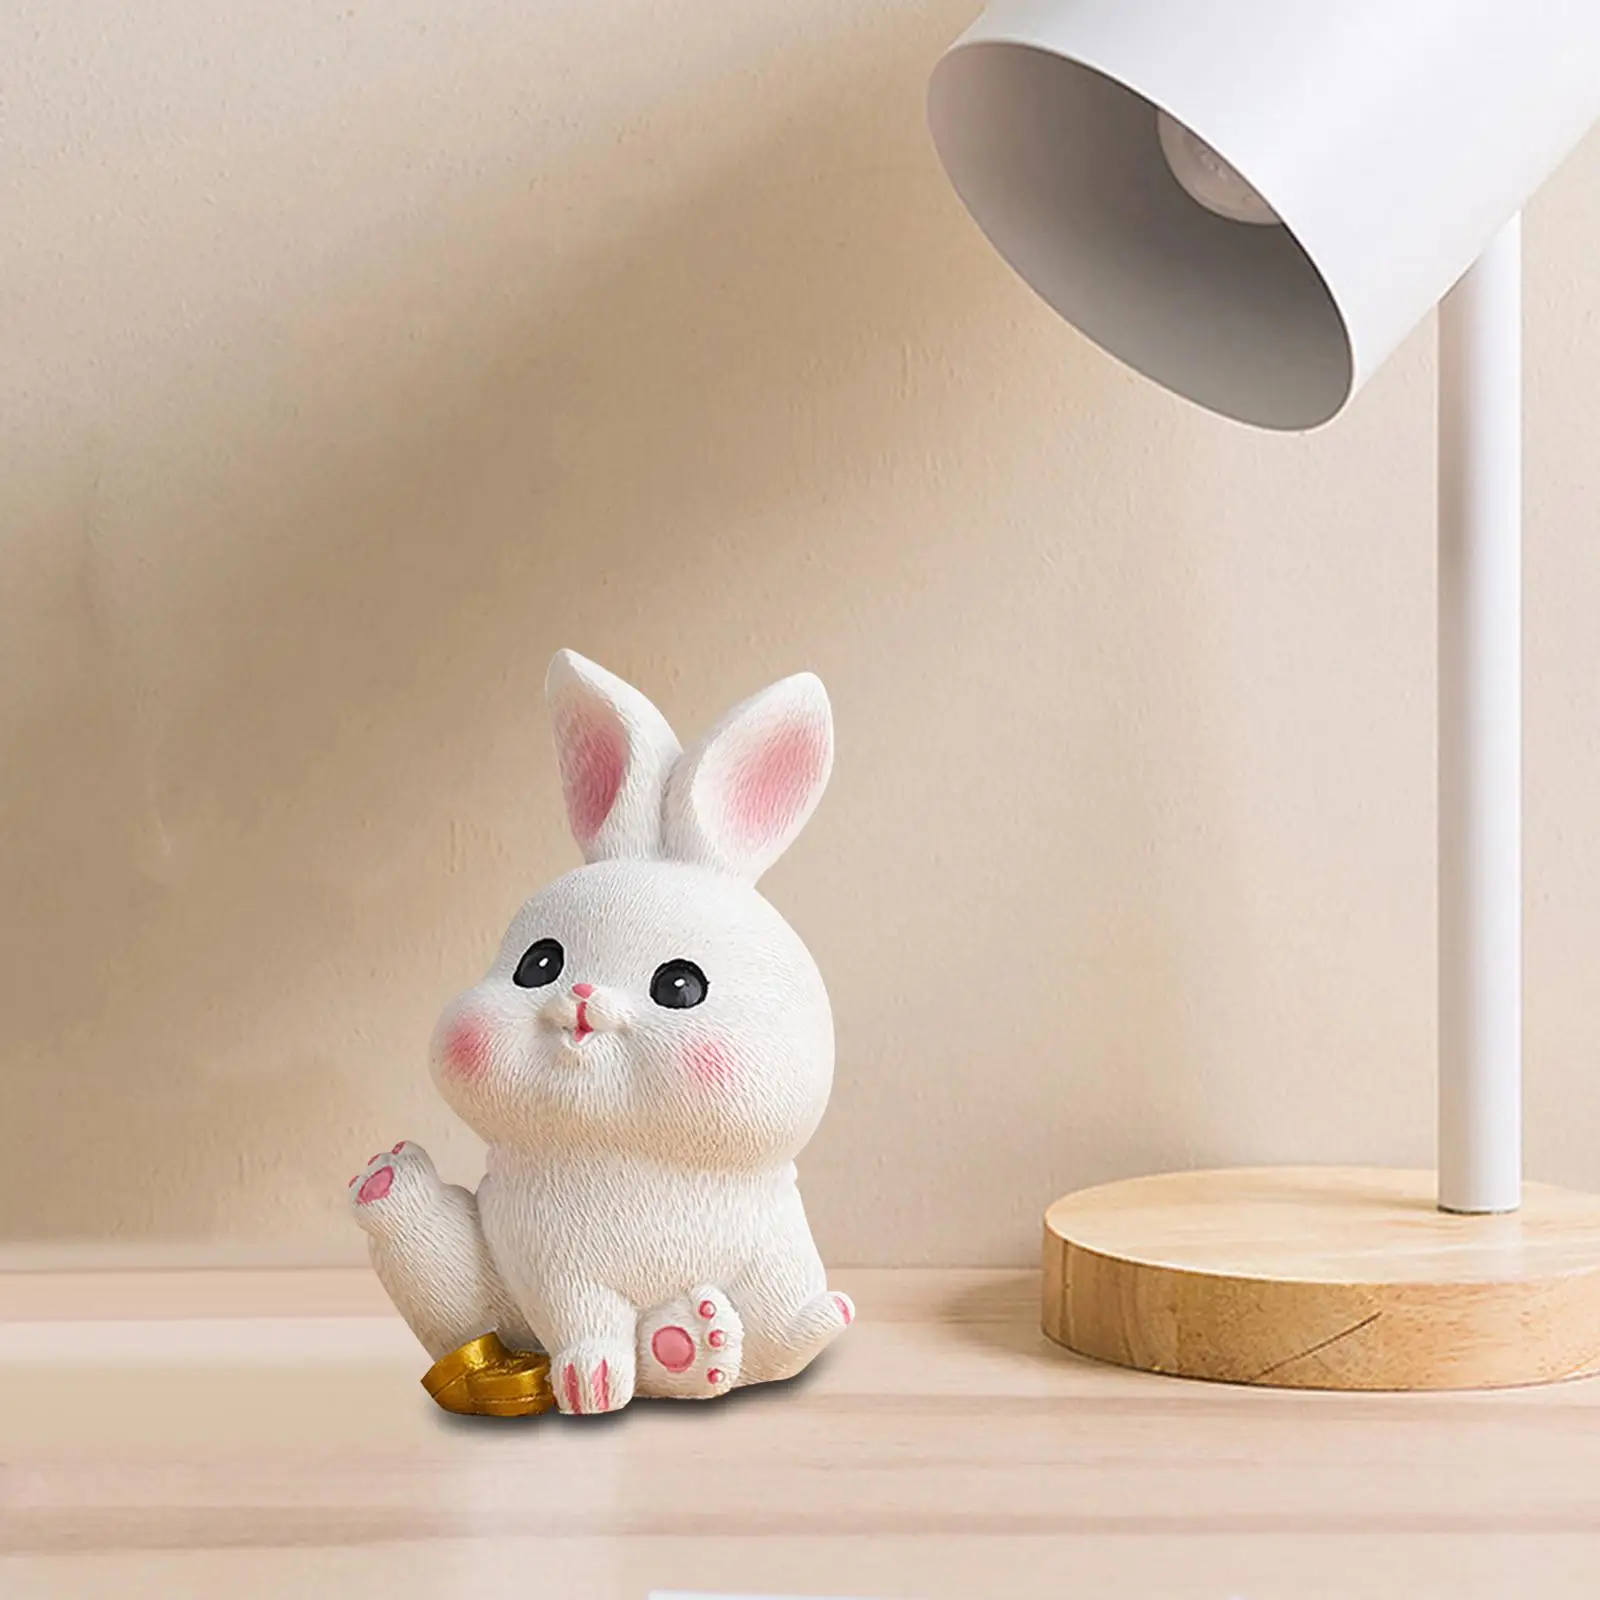 2x Rabbit Statue Miniature Desktop Ornament Animal Sculpture for Bedroom